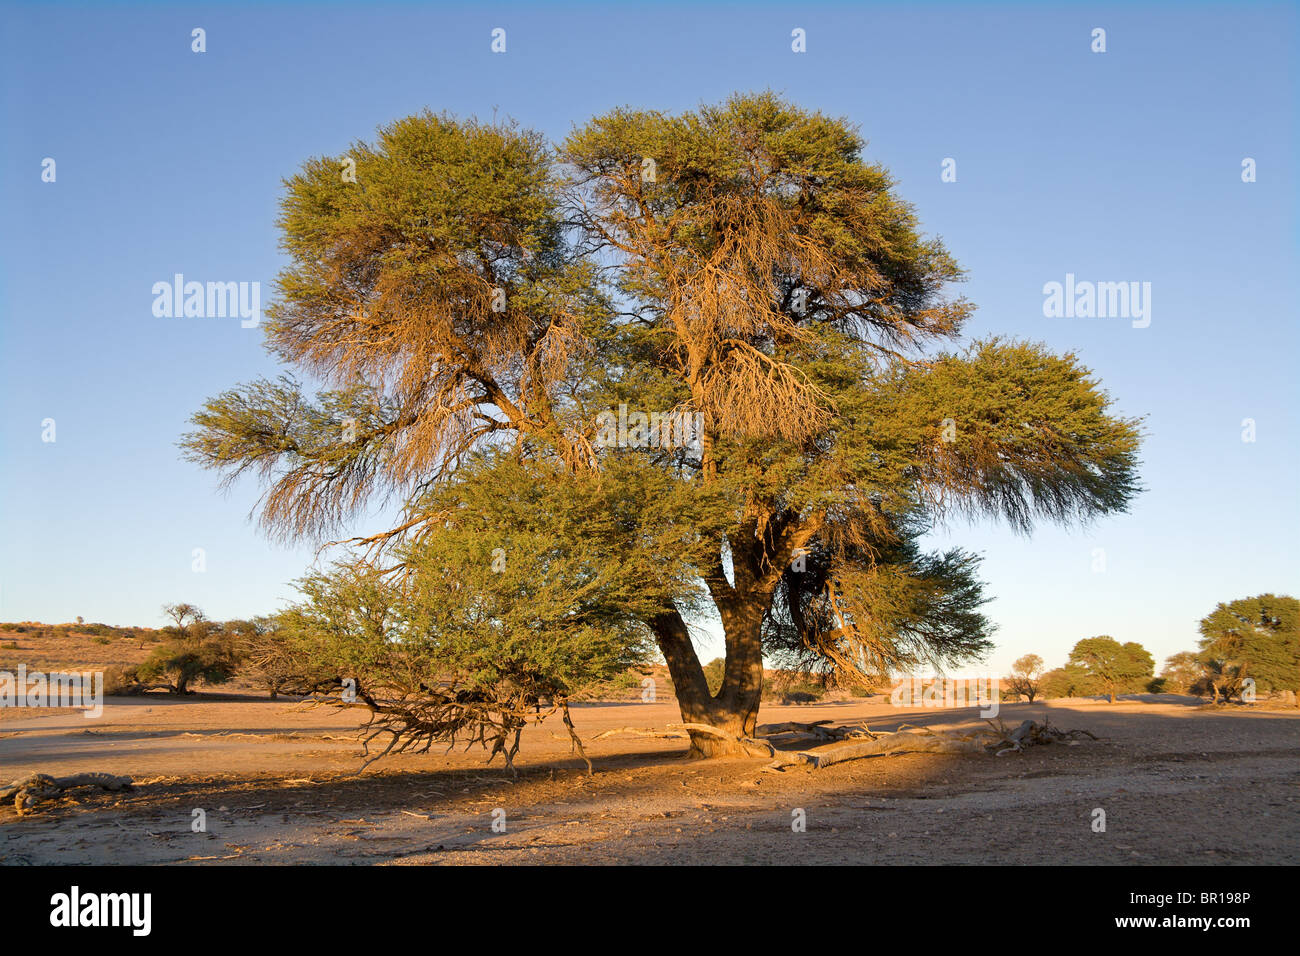 Paysage africain avec un camelthorn arbre Acacia (Acacia erioloba), Kgalagadi Transfrontier Park, Afrique du Sud Banque D'Images